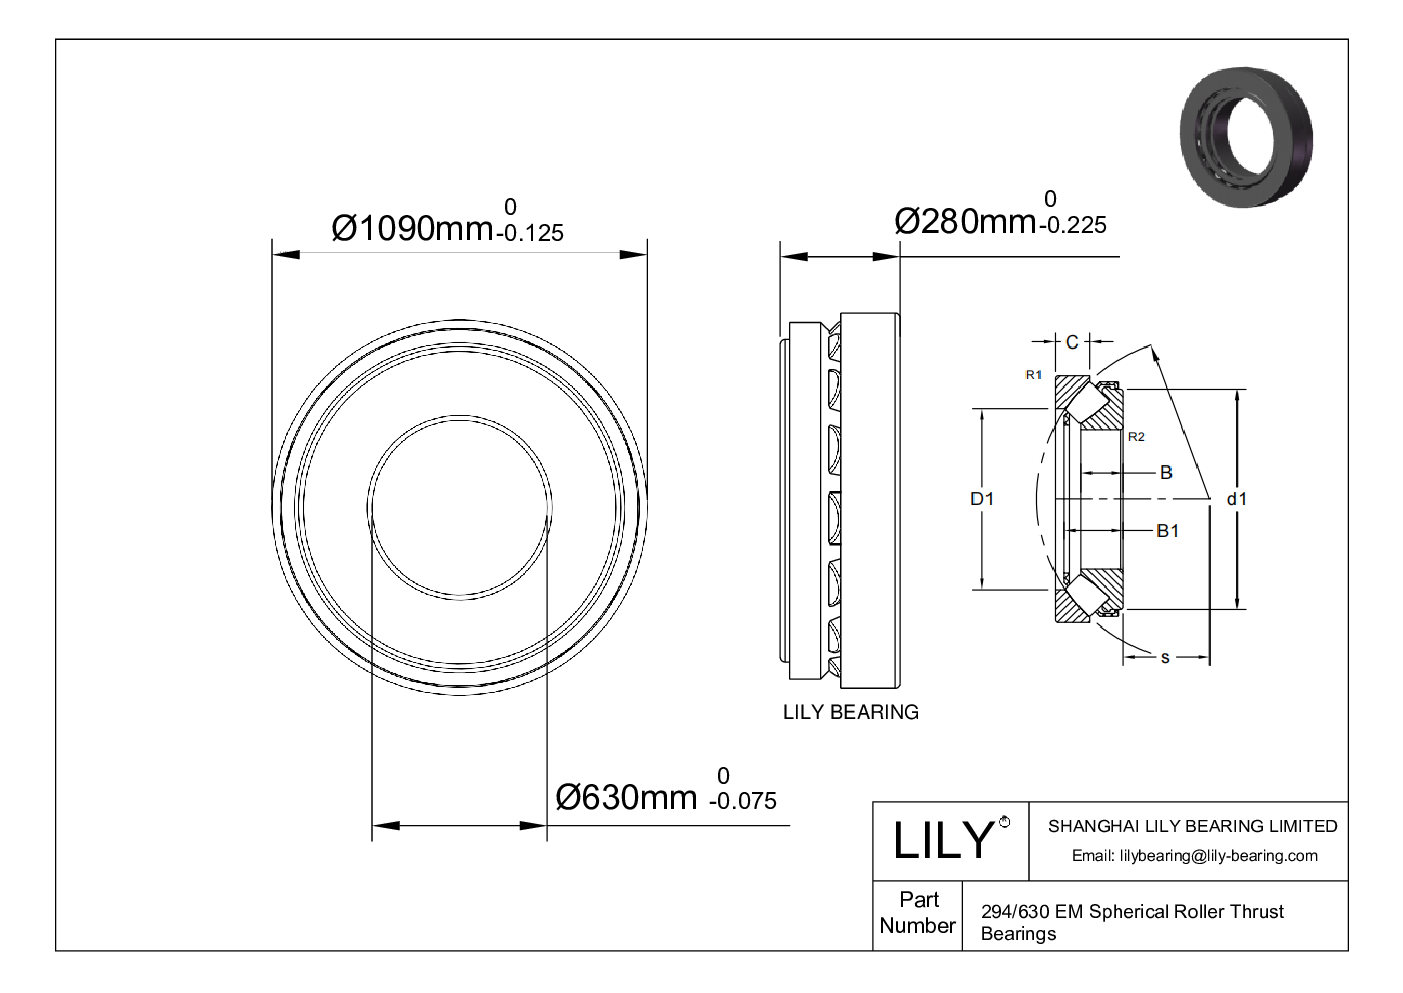 294/630 EM Spherical Roller Thrust Bearings cad drawing